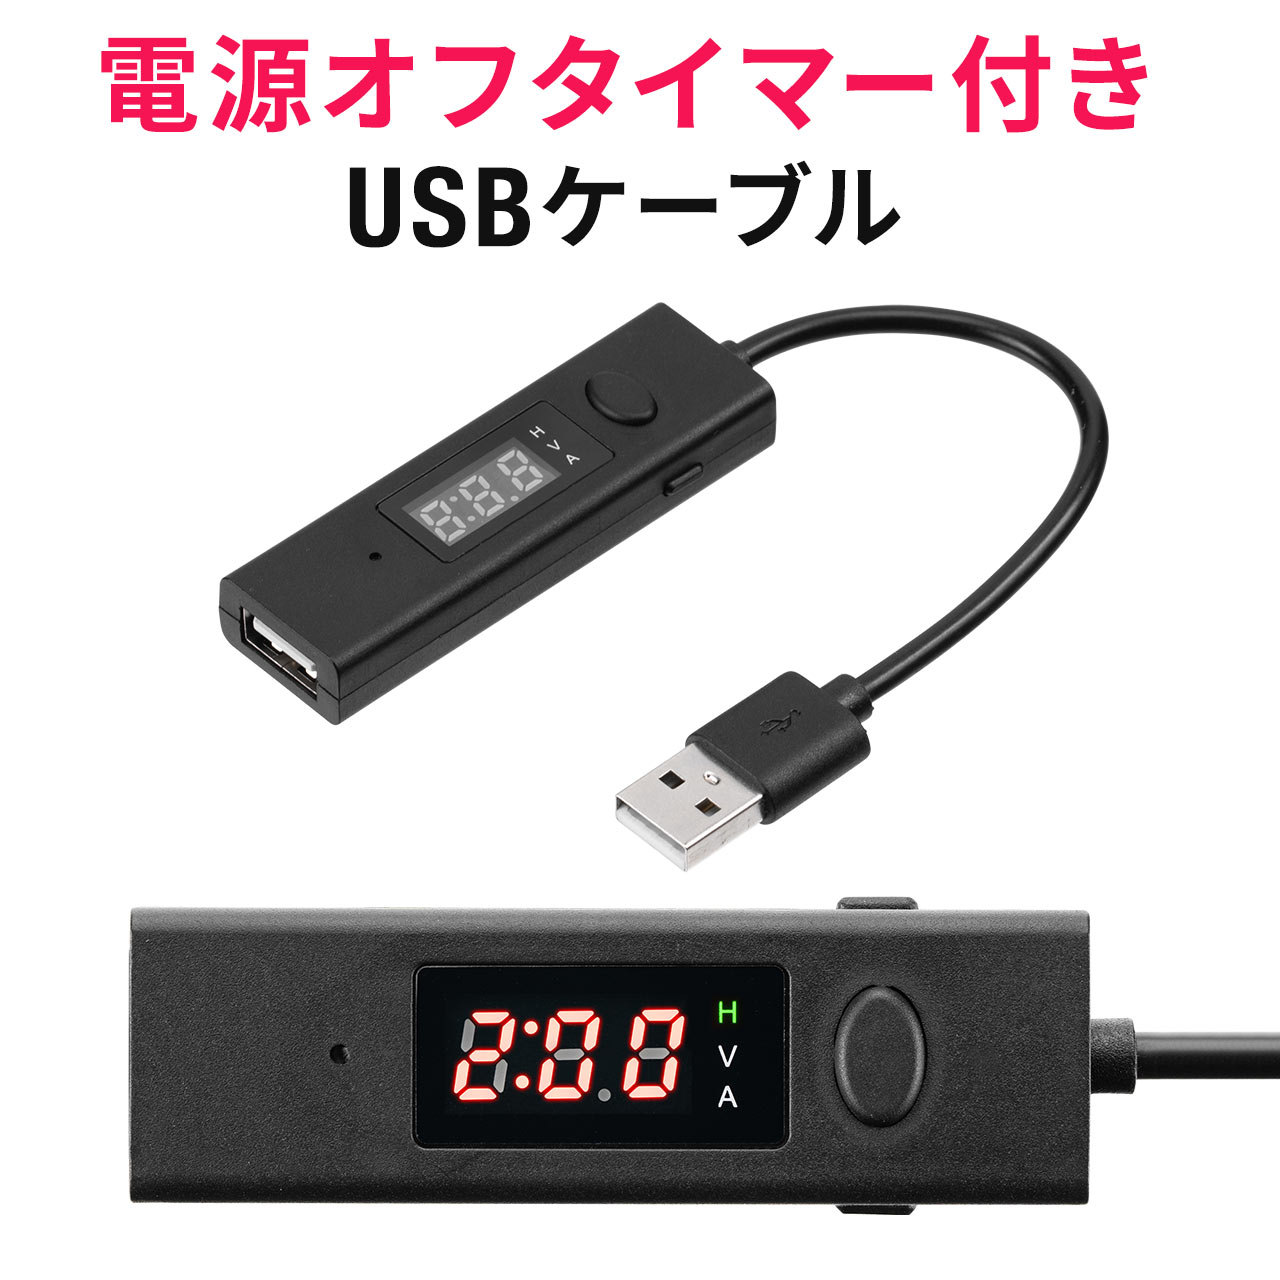 USBケーブル タイマー付き Type-A USB2.0 電圧 電流 測定 アンペア数 充電 データ転送 3A対応 タイマー ケーブル 電源 給電 オフ 停止 切り忘れ防止 500-USB057